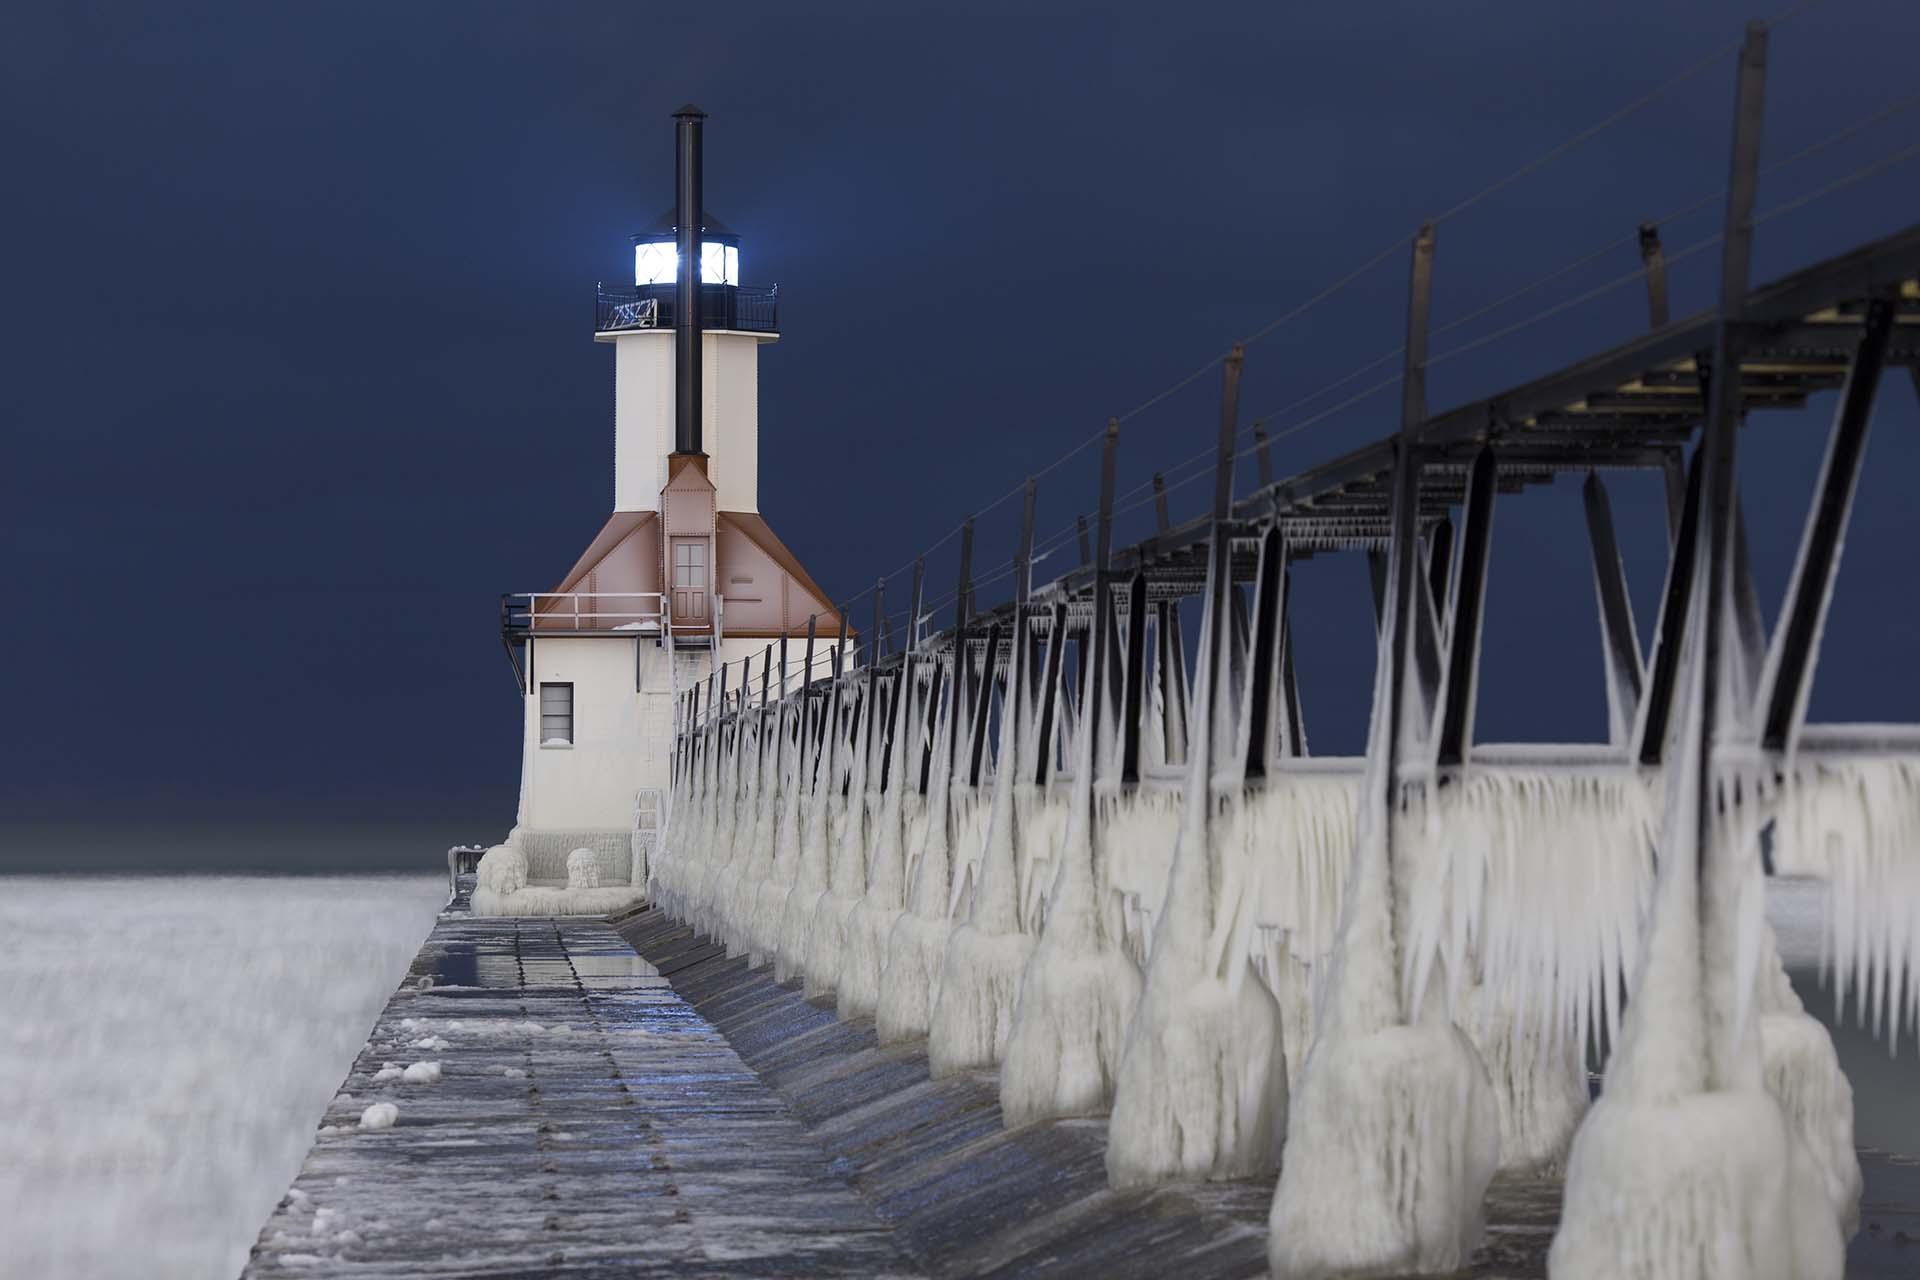 Winter at the lighthouse in St. Joseph, MI photo by Joshua Nowicki.